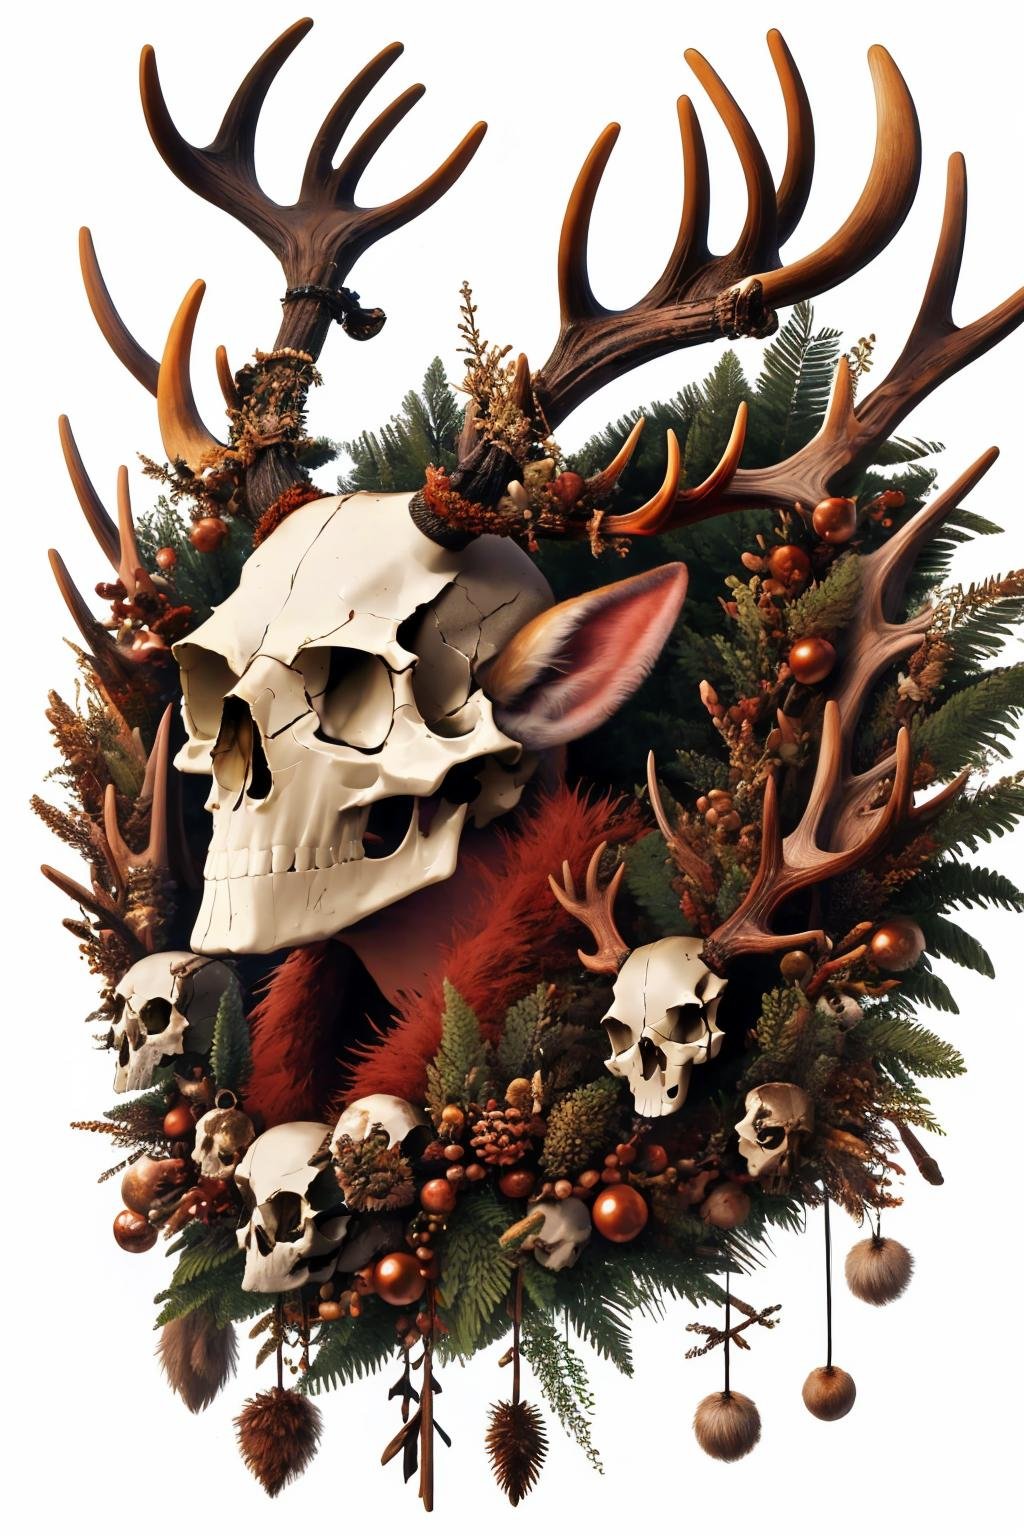 masterpiece, best quality, <lora:paganantler-style-richy-v1:1> antlerstyle, reindeer, reindeer antlers, skull